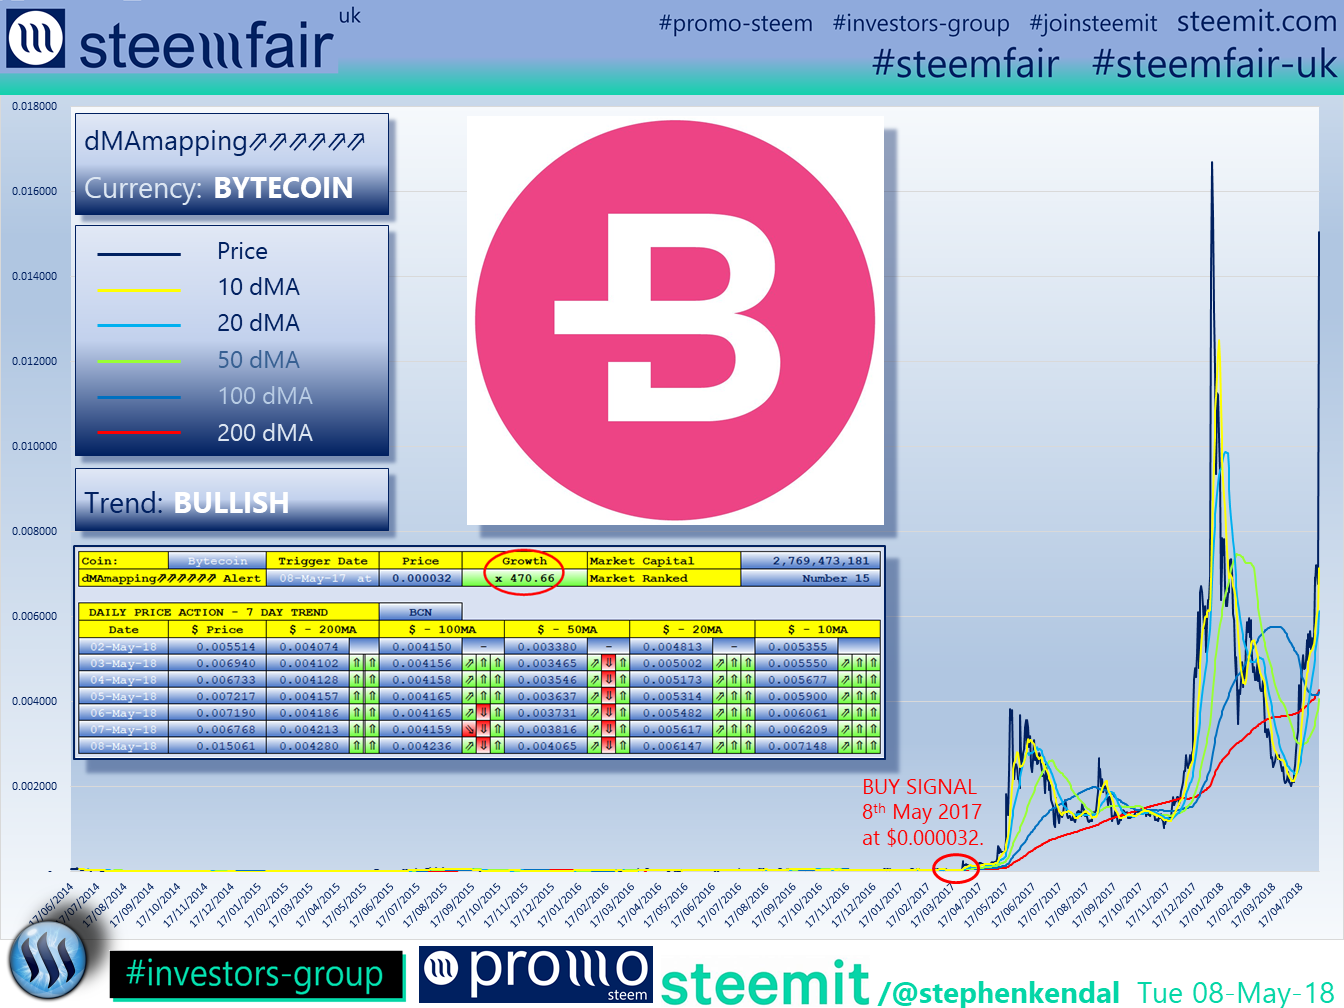 SteemFair SteemFair-uk Promo-Steem Investors-Group Bytecoin